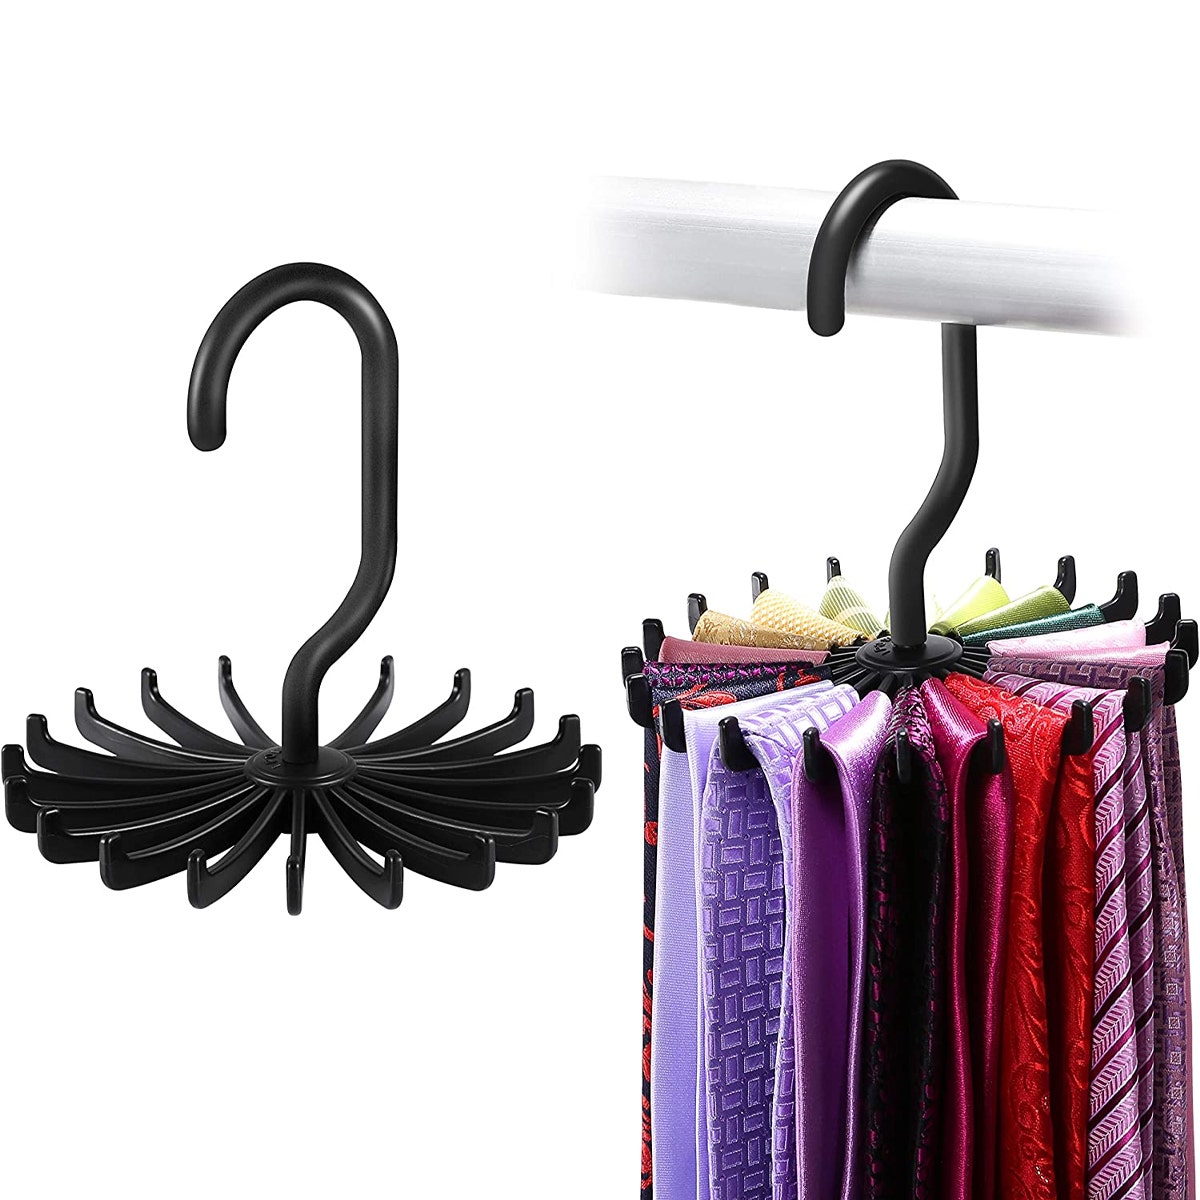 28 Circles Clothes Tie Scarf Rack Hanger DIY Rack Holder Organizer